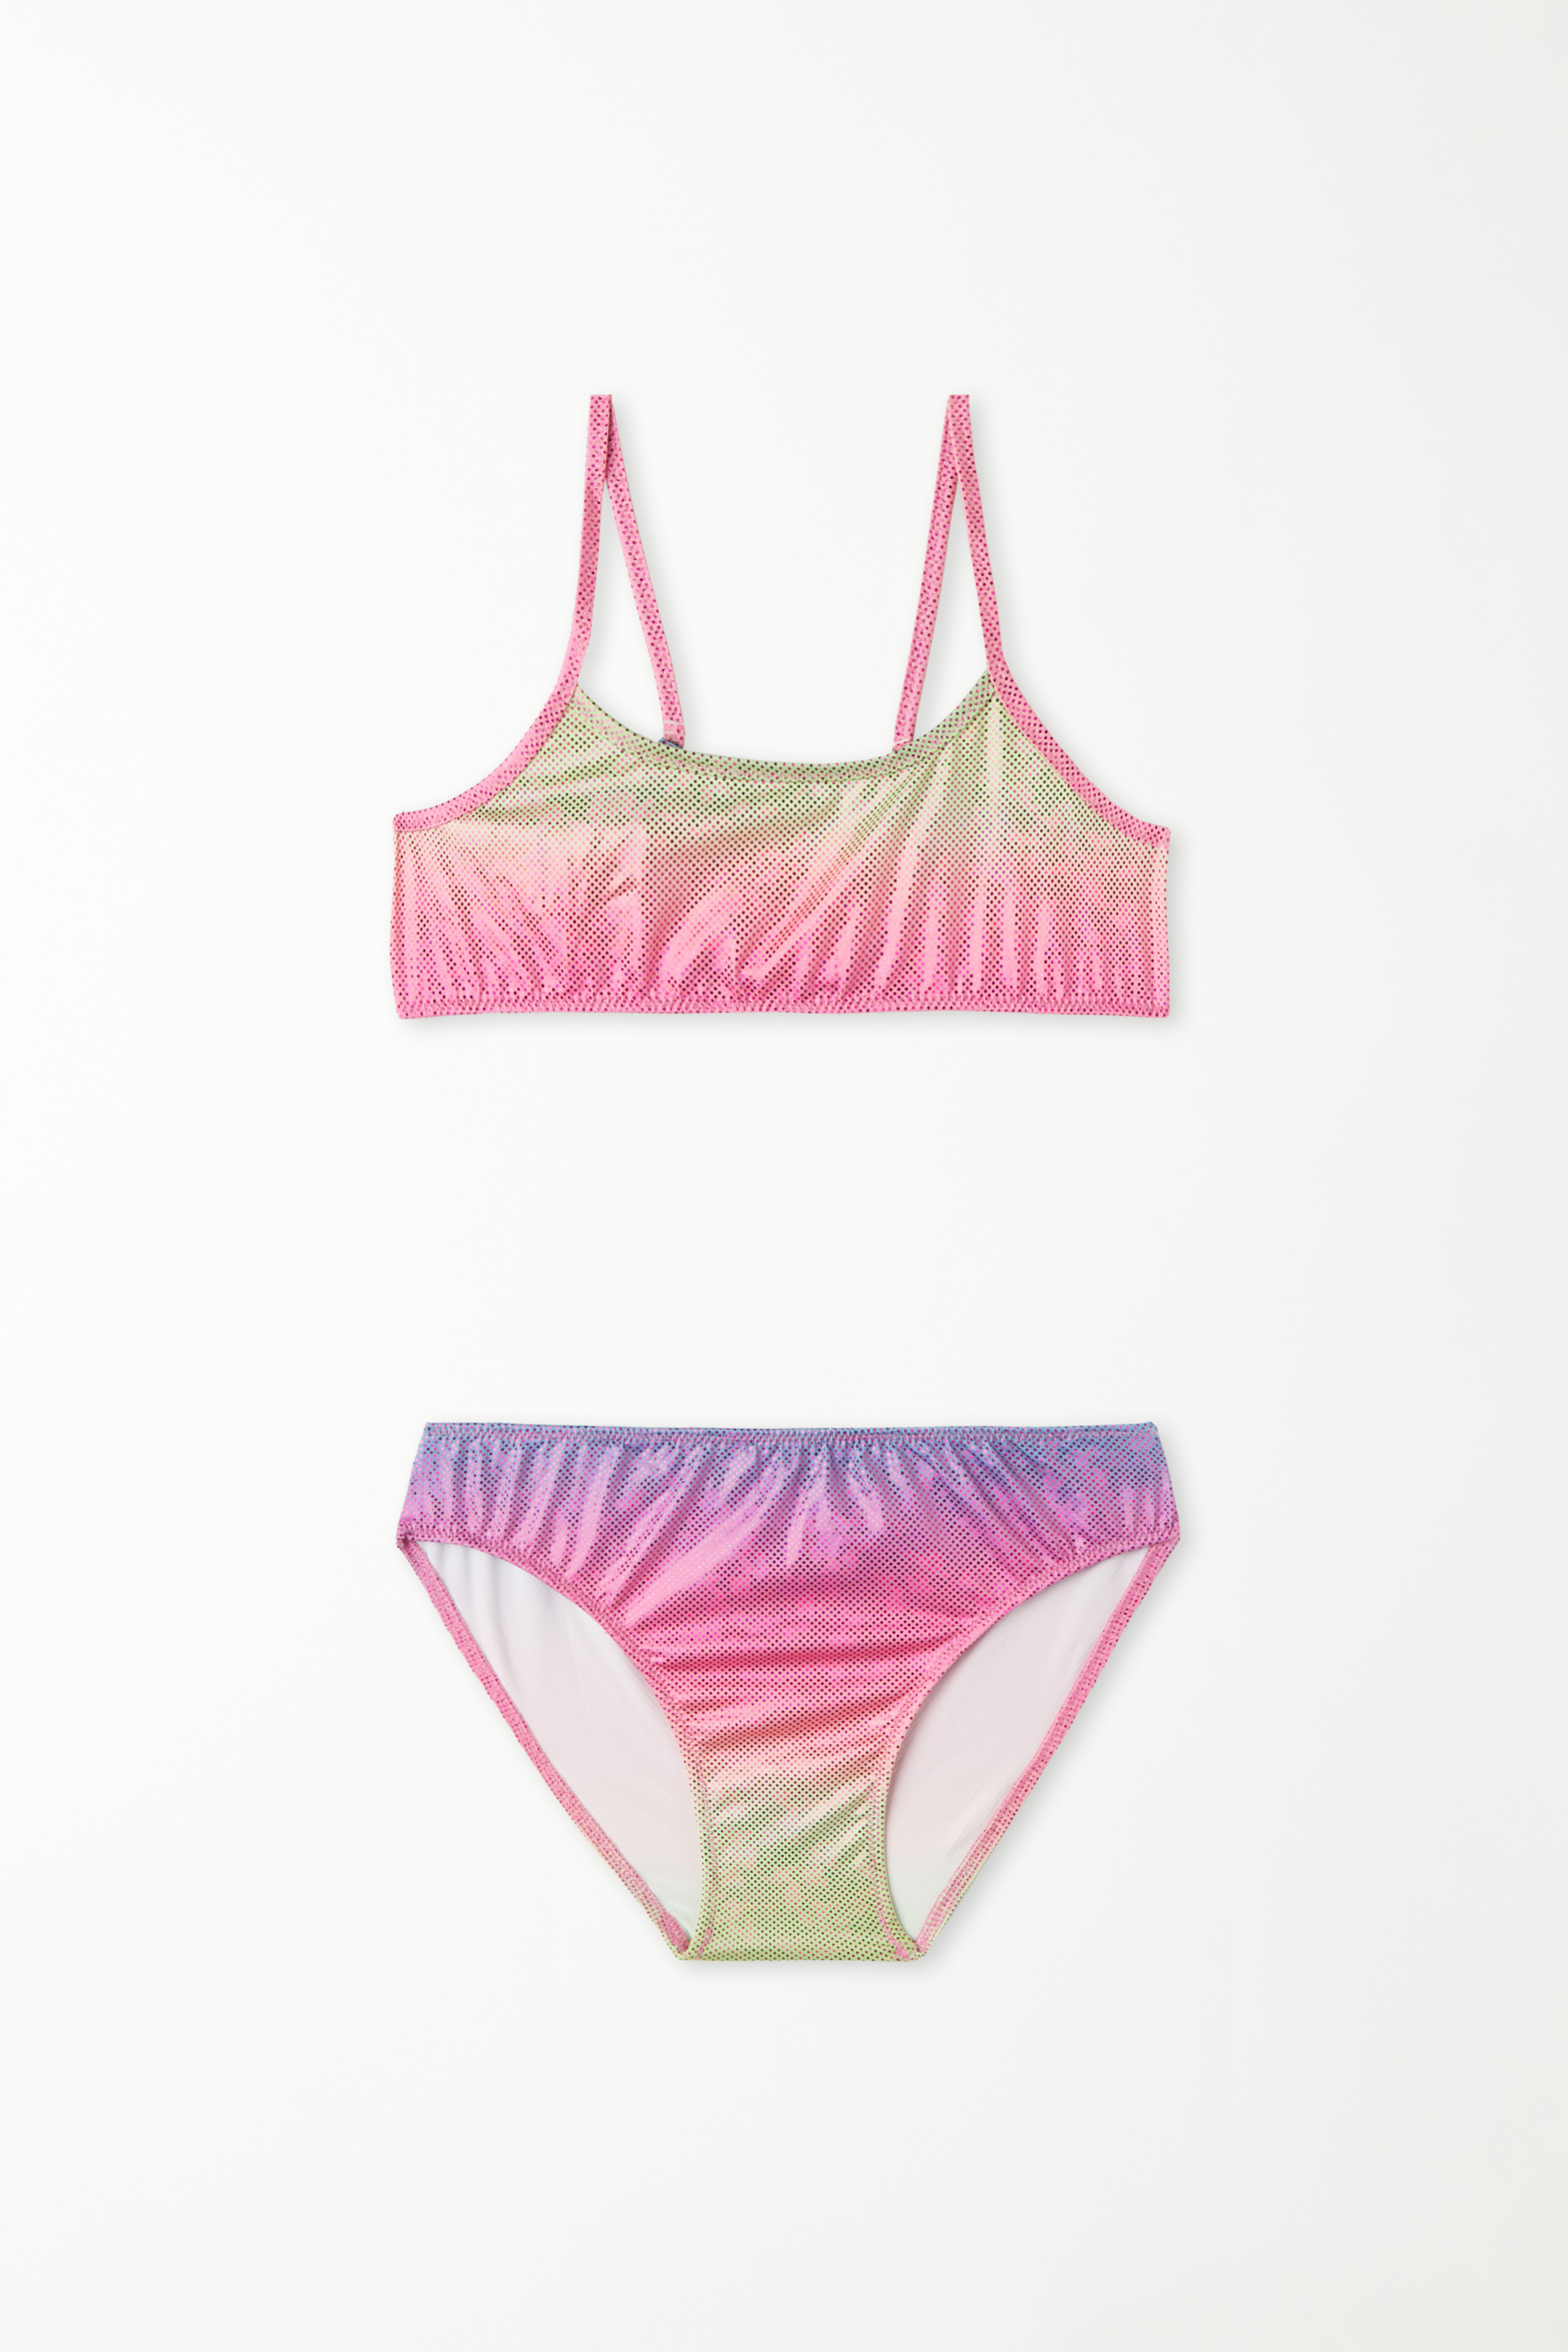 Girls’ Faded Mermaid Bikini Top and Bottoms